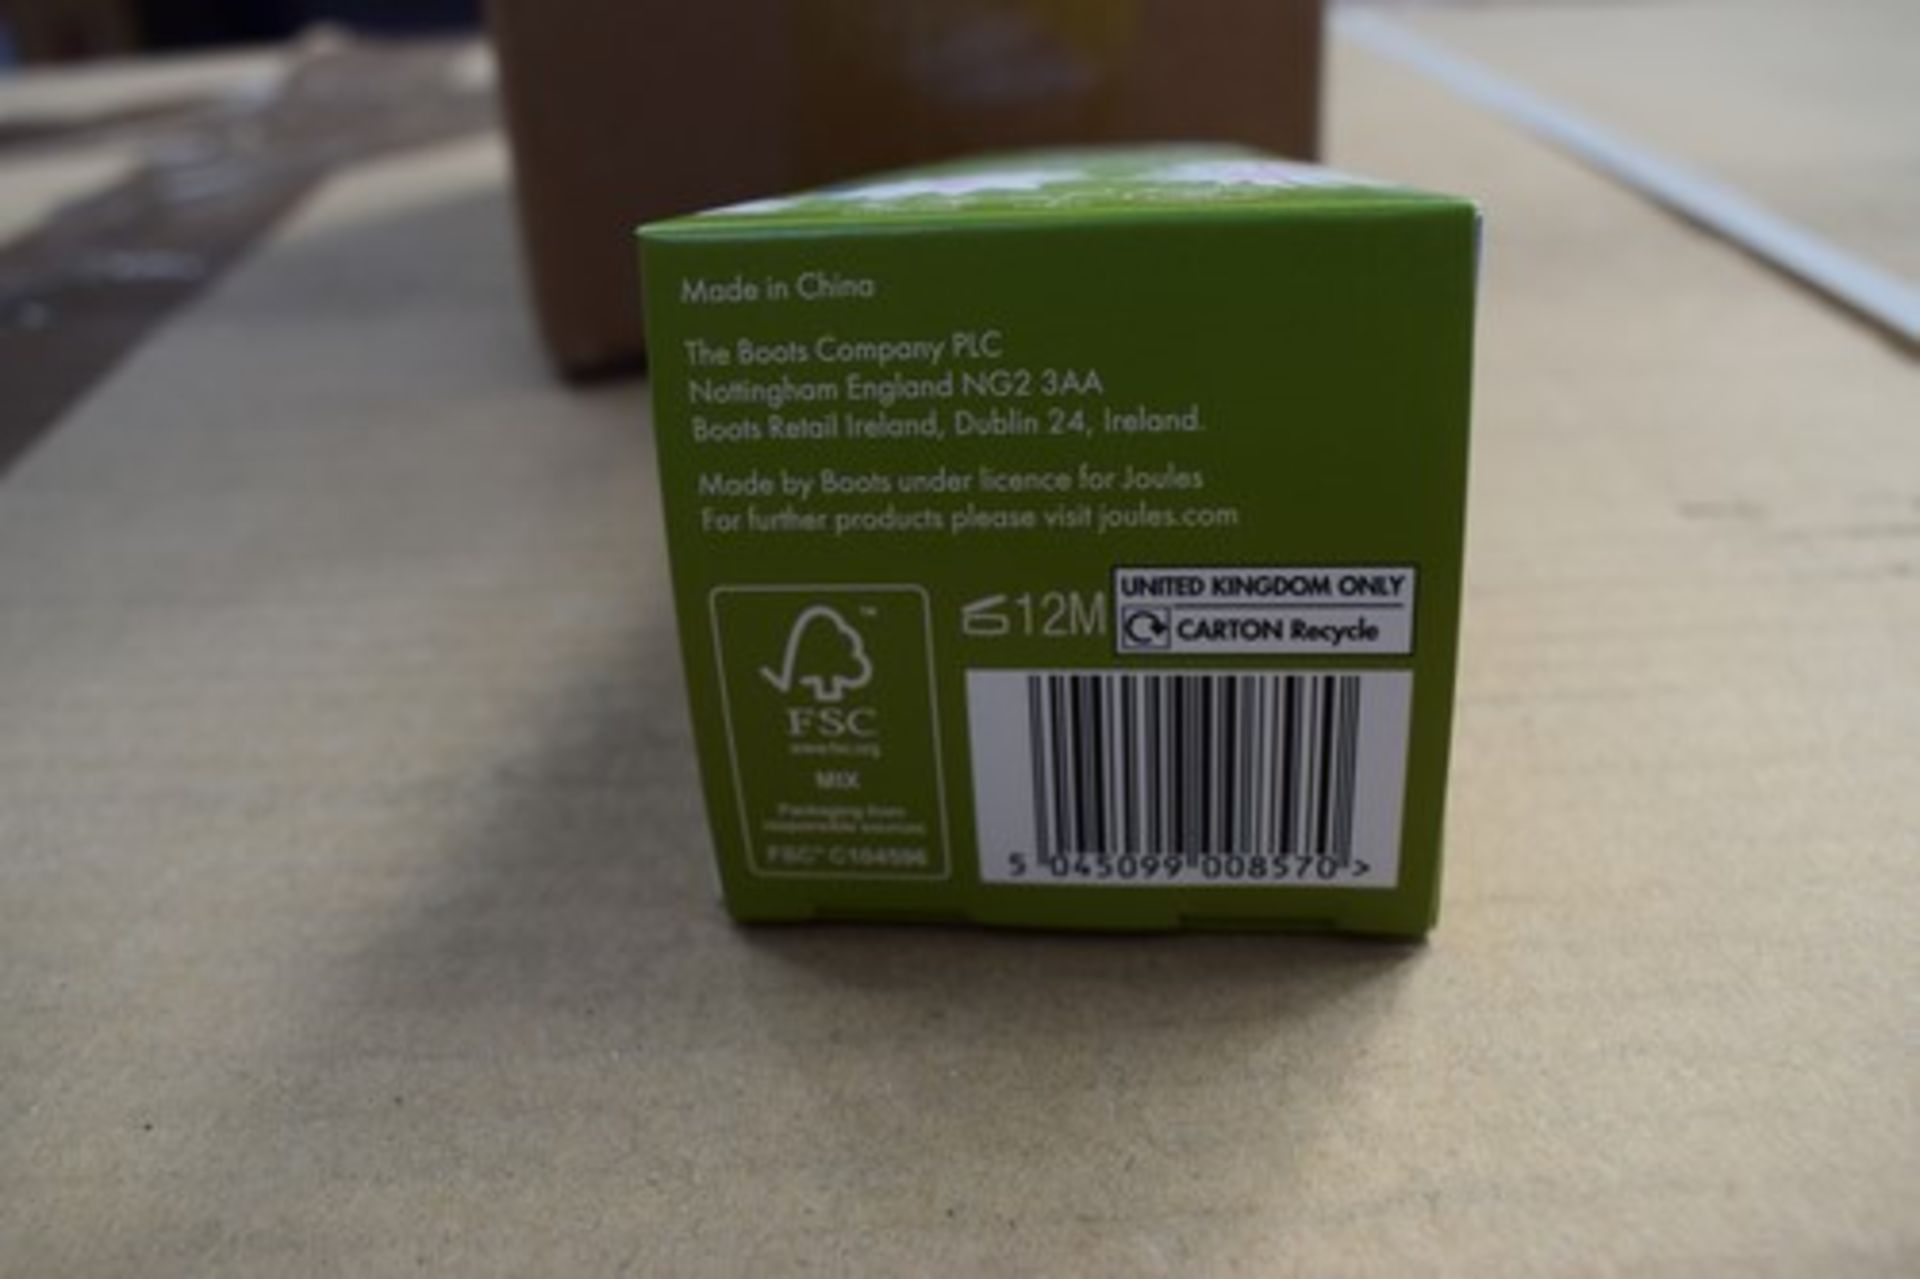 18 x 50ml tubes of Joules, nourishing hand cream, EAN: 5045099008570 - new in box (C11) - Image 2 of 2